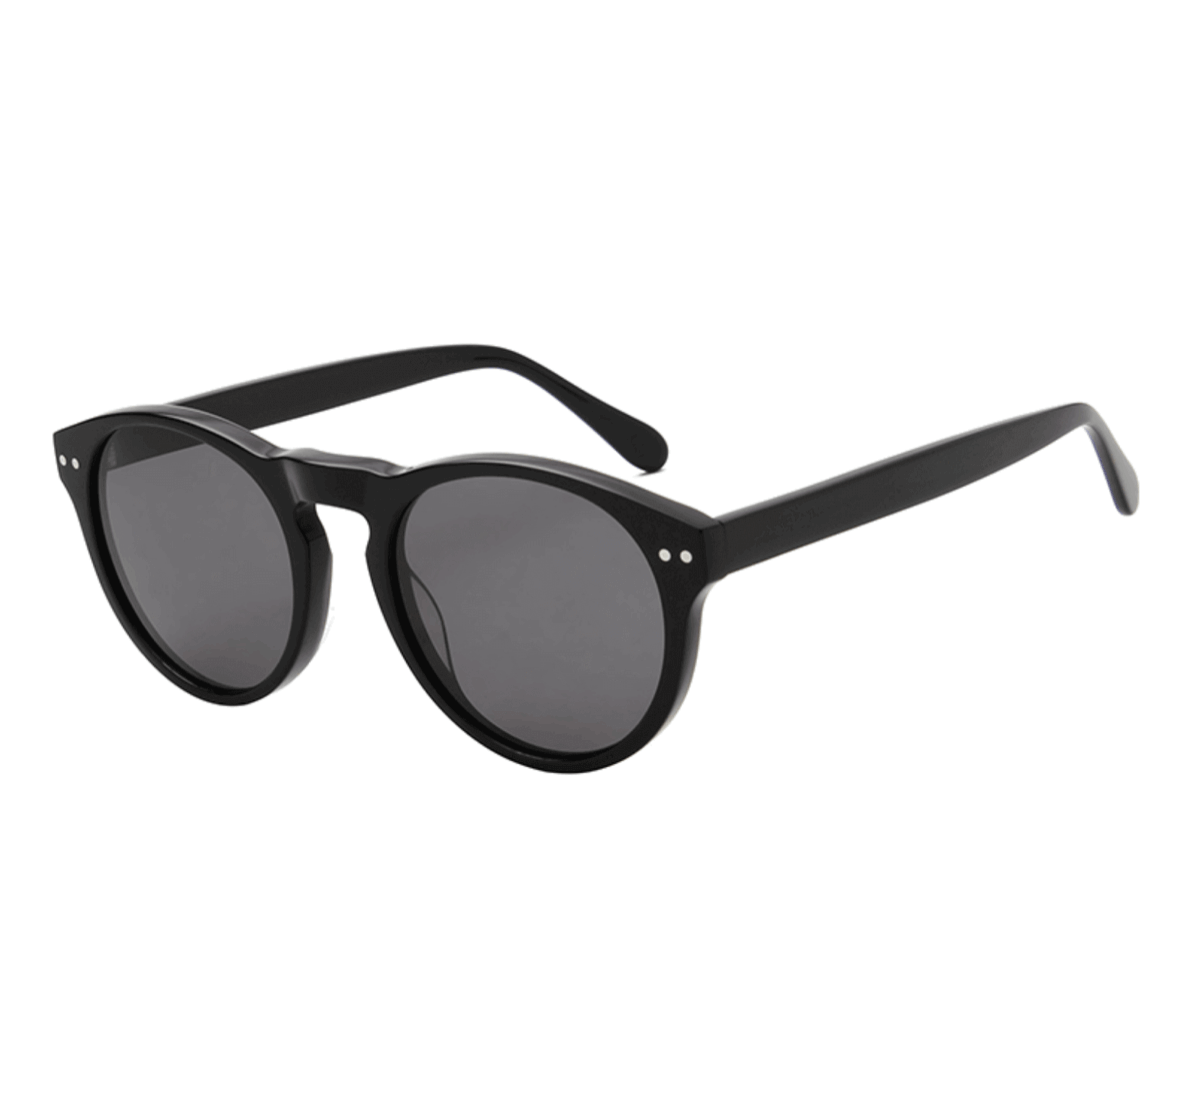 Wholesale round acetate sunglasses, wholesale acetate sunglasses, acetate sunglasses manufacturer, wholesale sunglasses, Chinese sunglasses manufacturers, glasses manufacturers